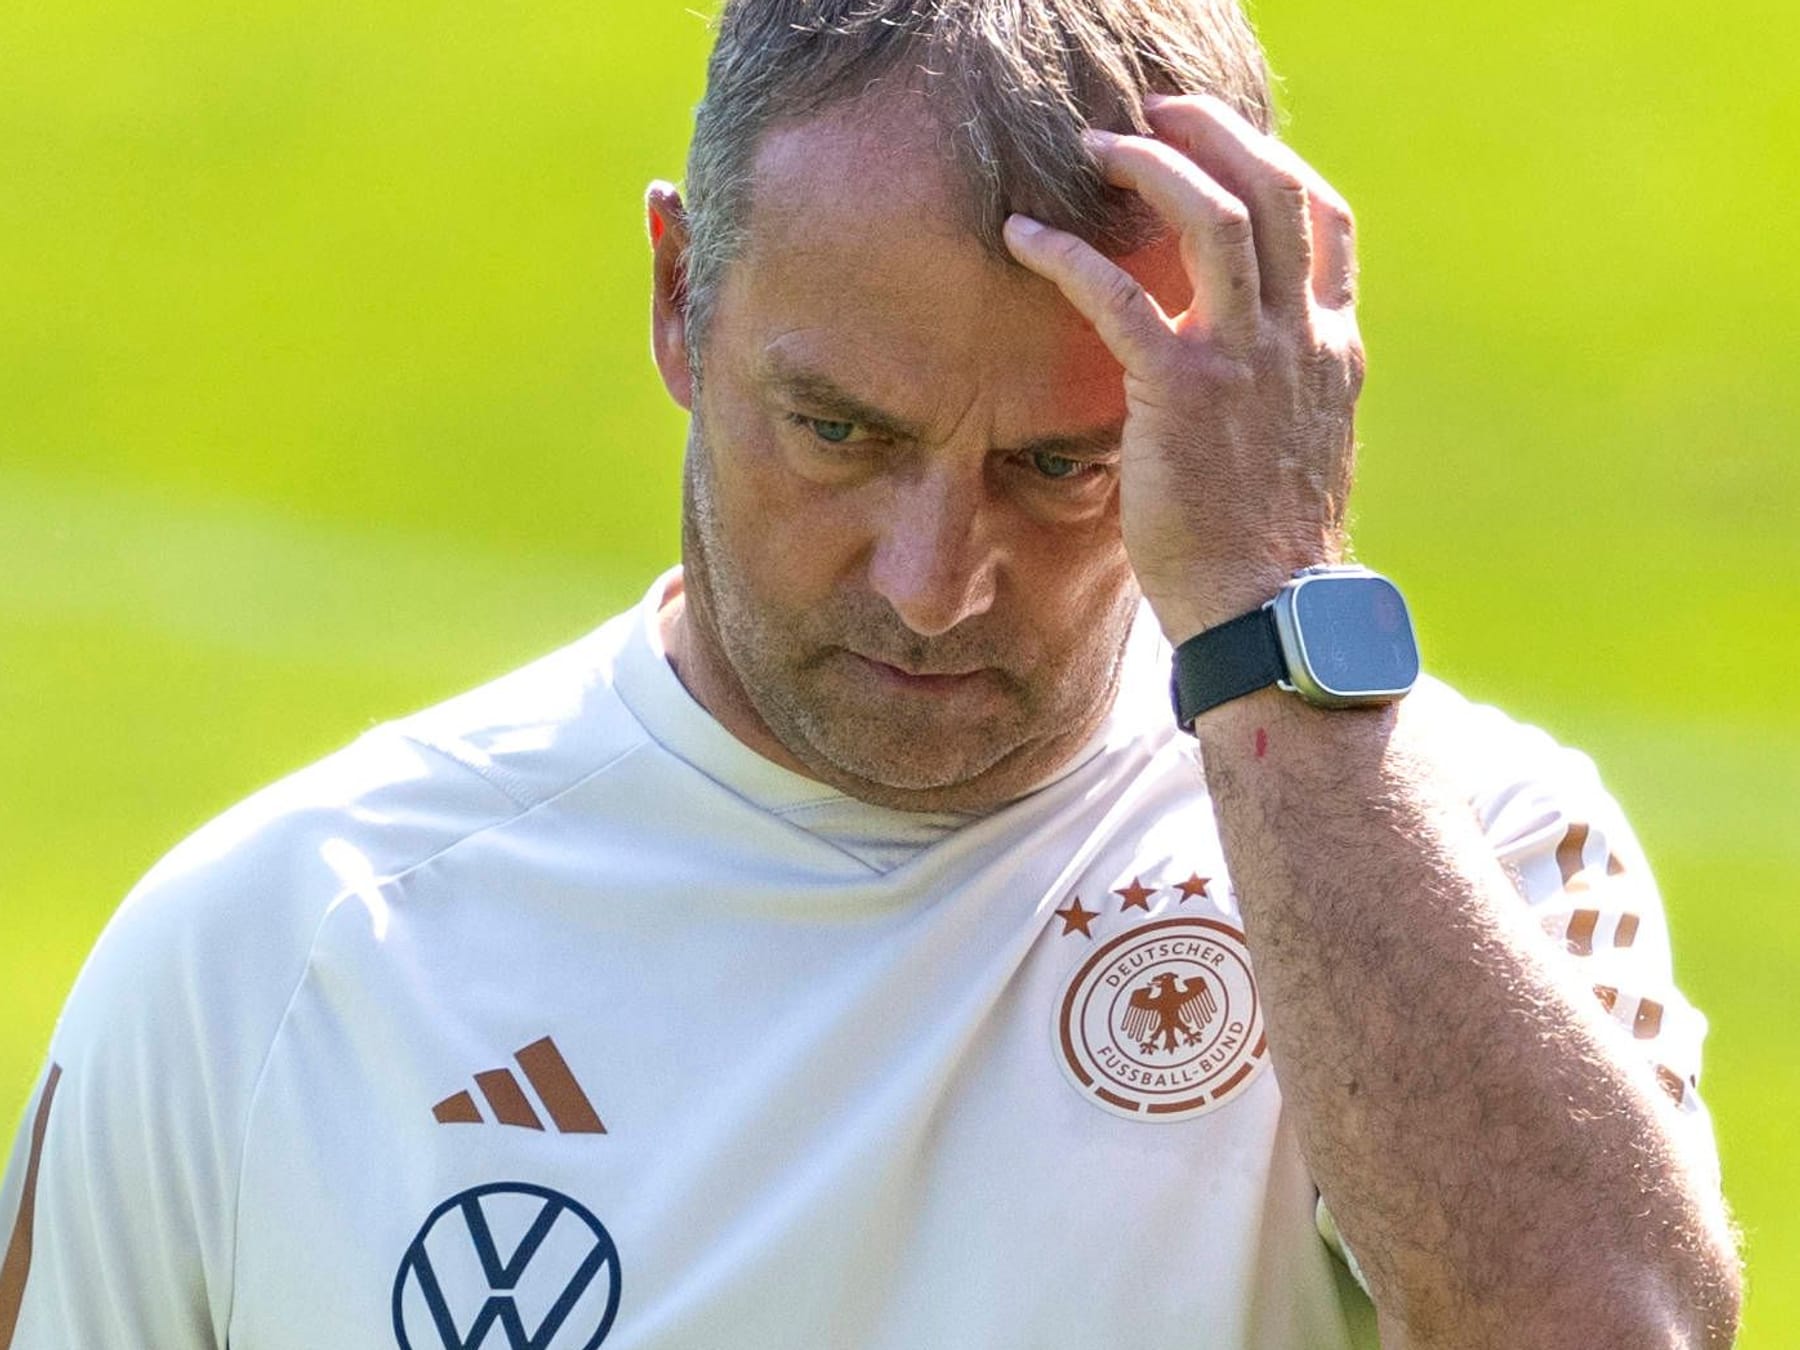 Offiziell Hansi Flick als DFB-Trainer entlassen